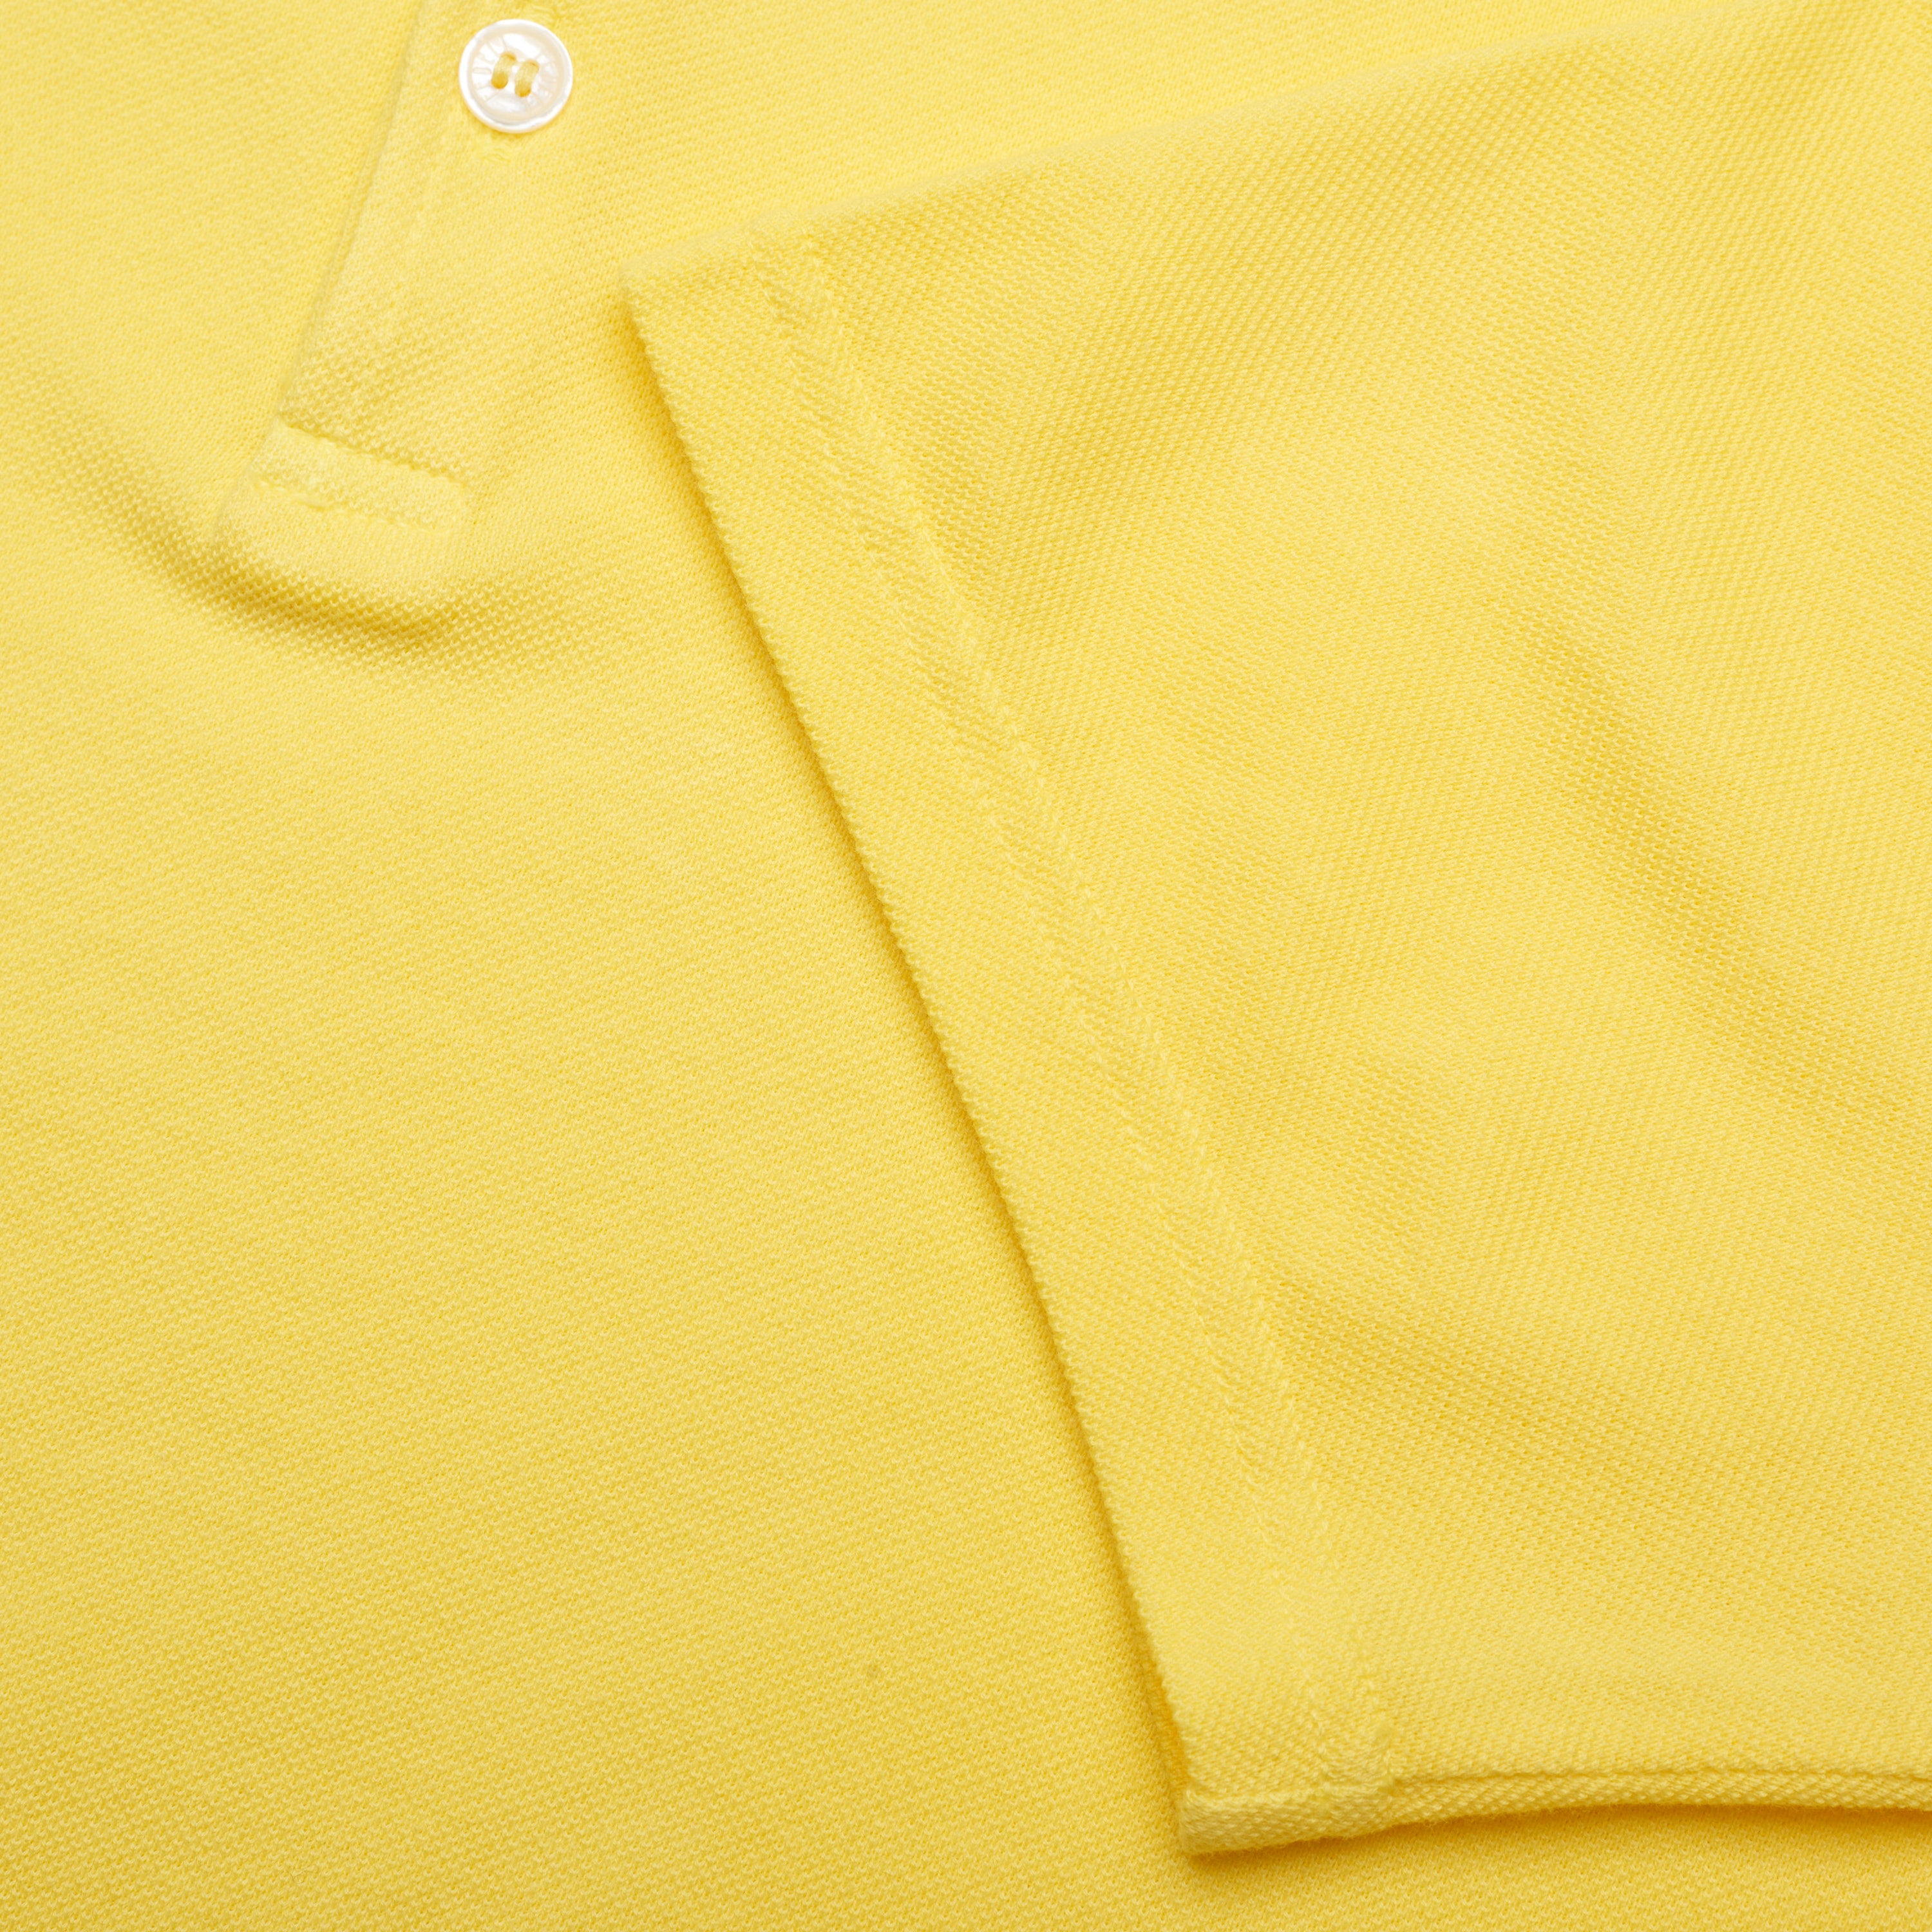 FEDELI "Tommy" Yellow Cotton Short Sleeve Pique Polo Shirt EU 52 NEW US L FEDELI